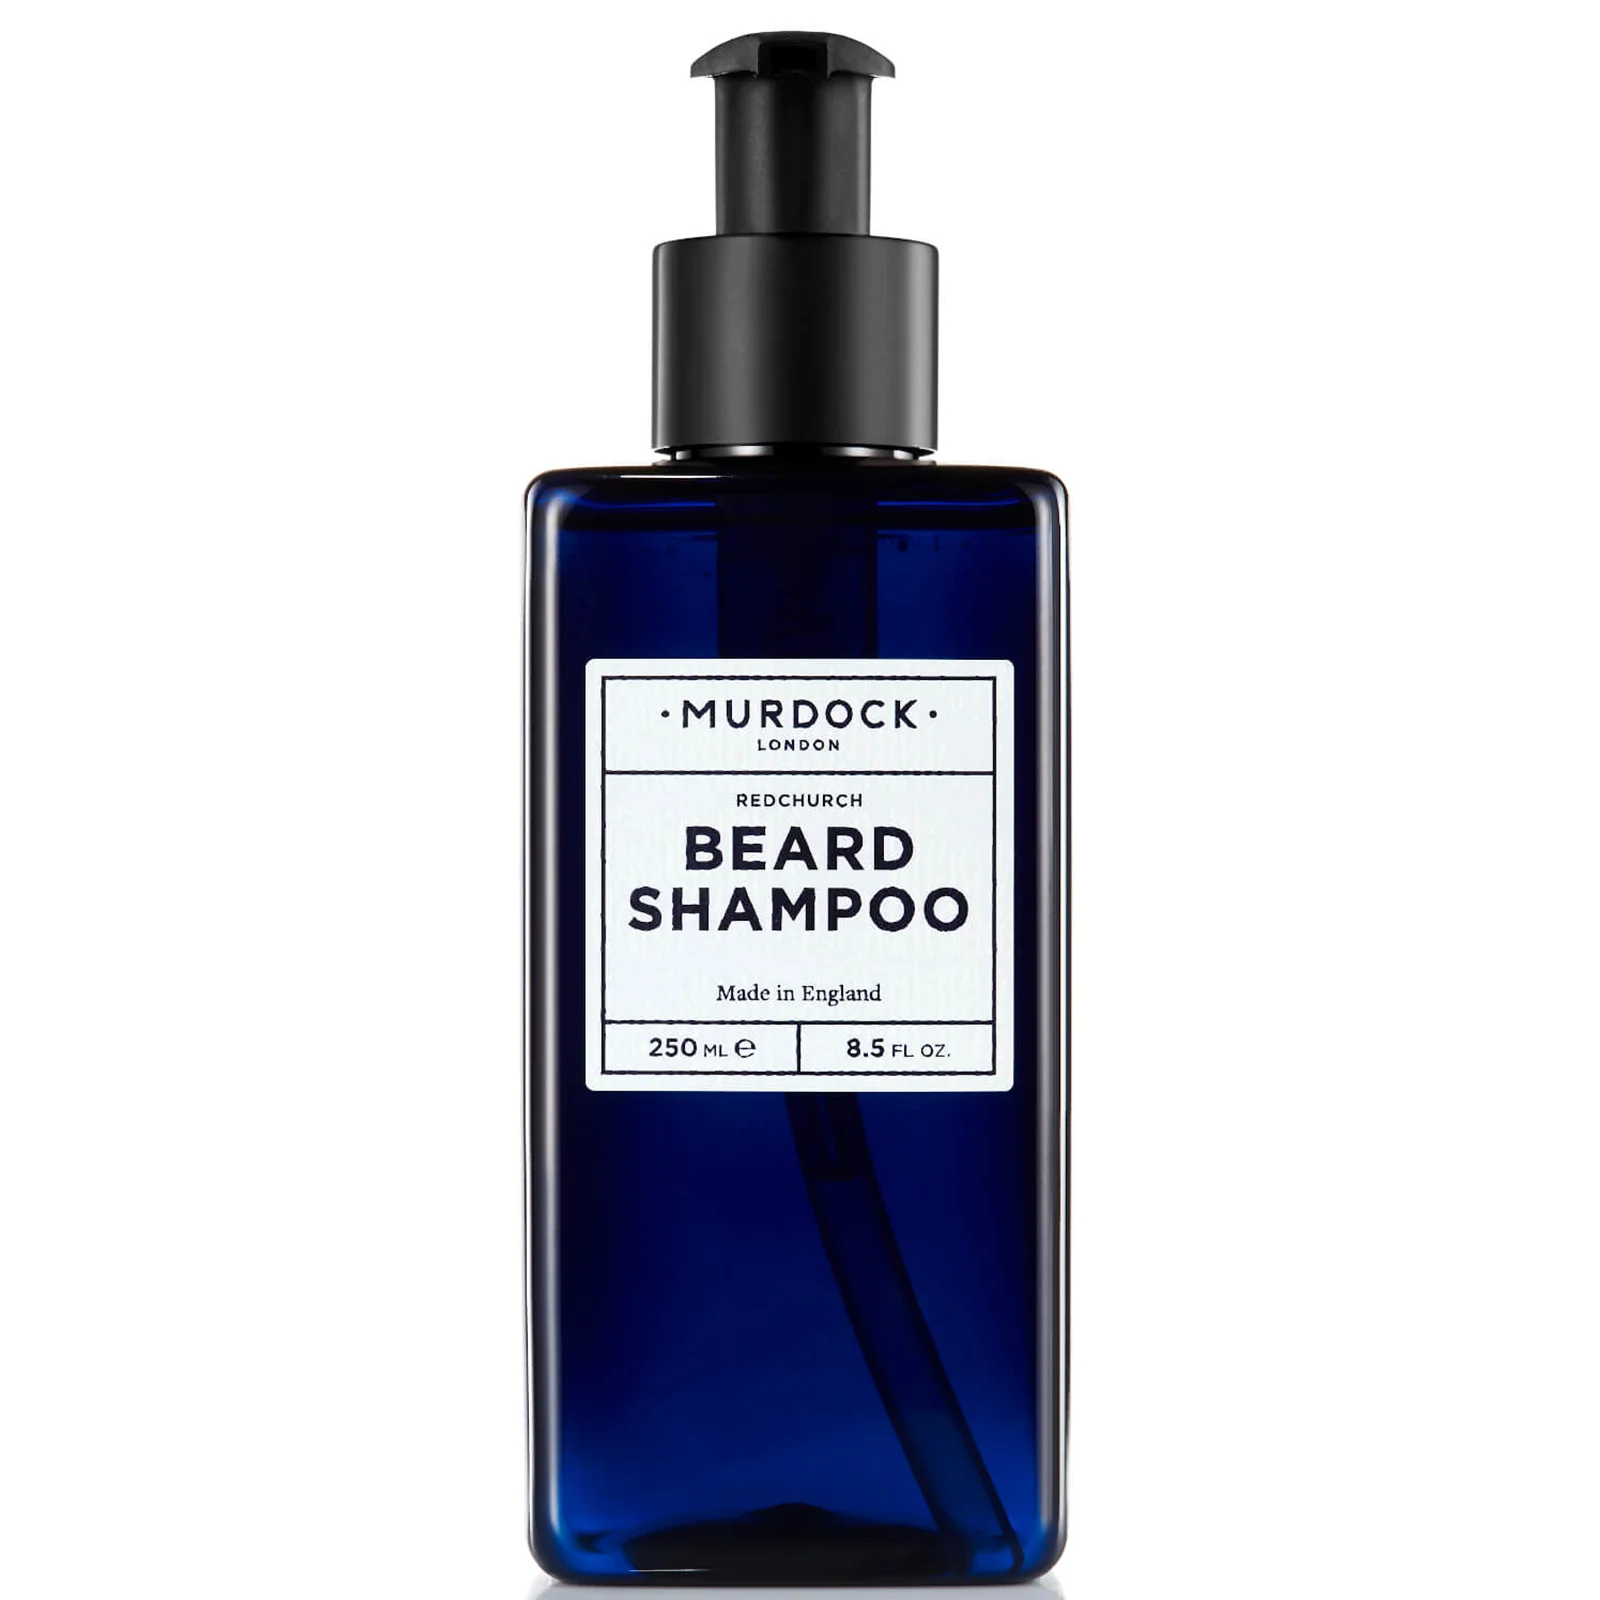 Murdock London Beard Shampoo 250ml Image 1